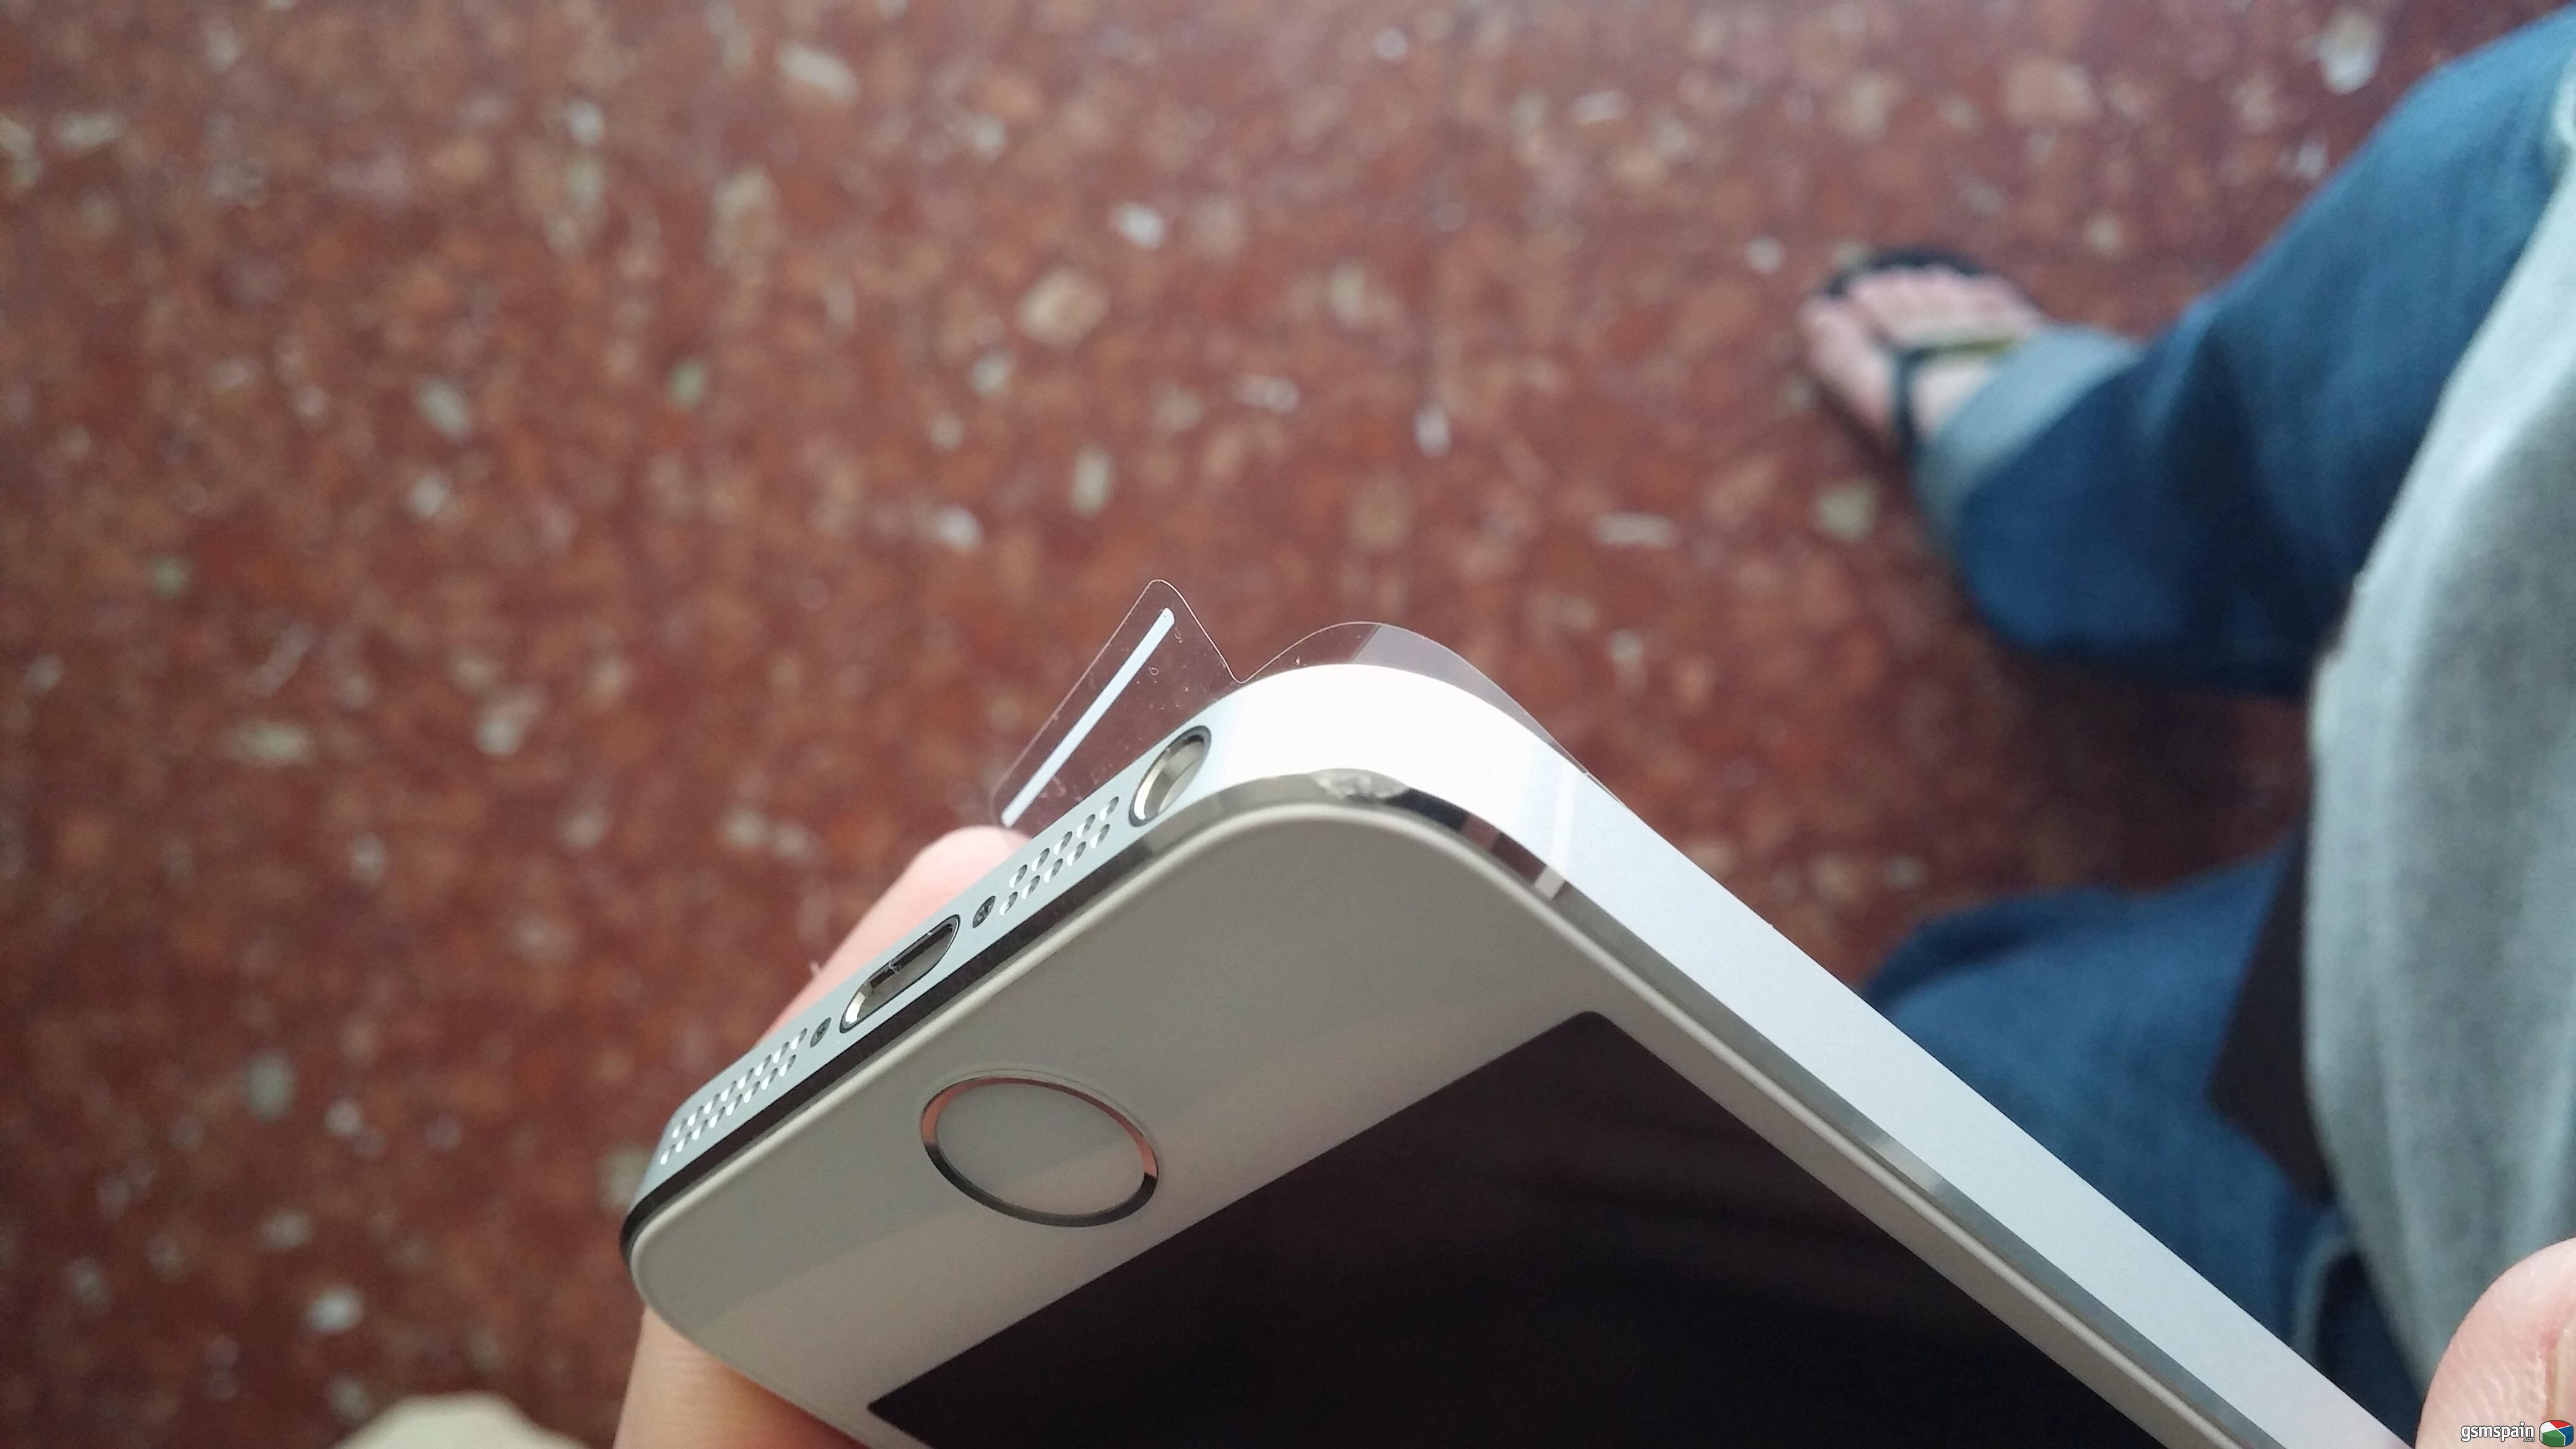 [CAMBIO] Iphone 5s 64gb plata orange con factura, menos de 1 mes